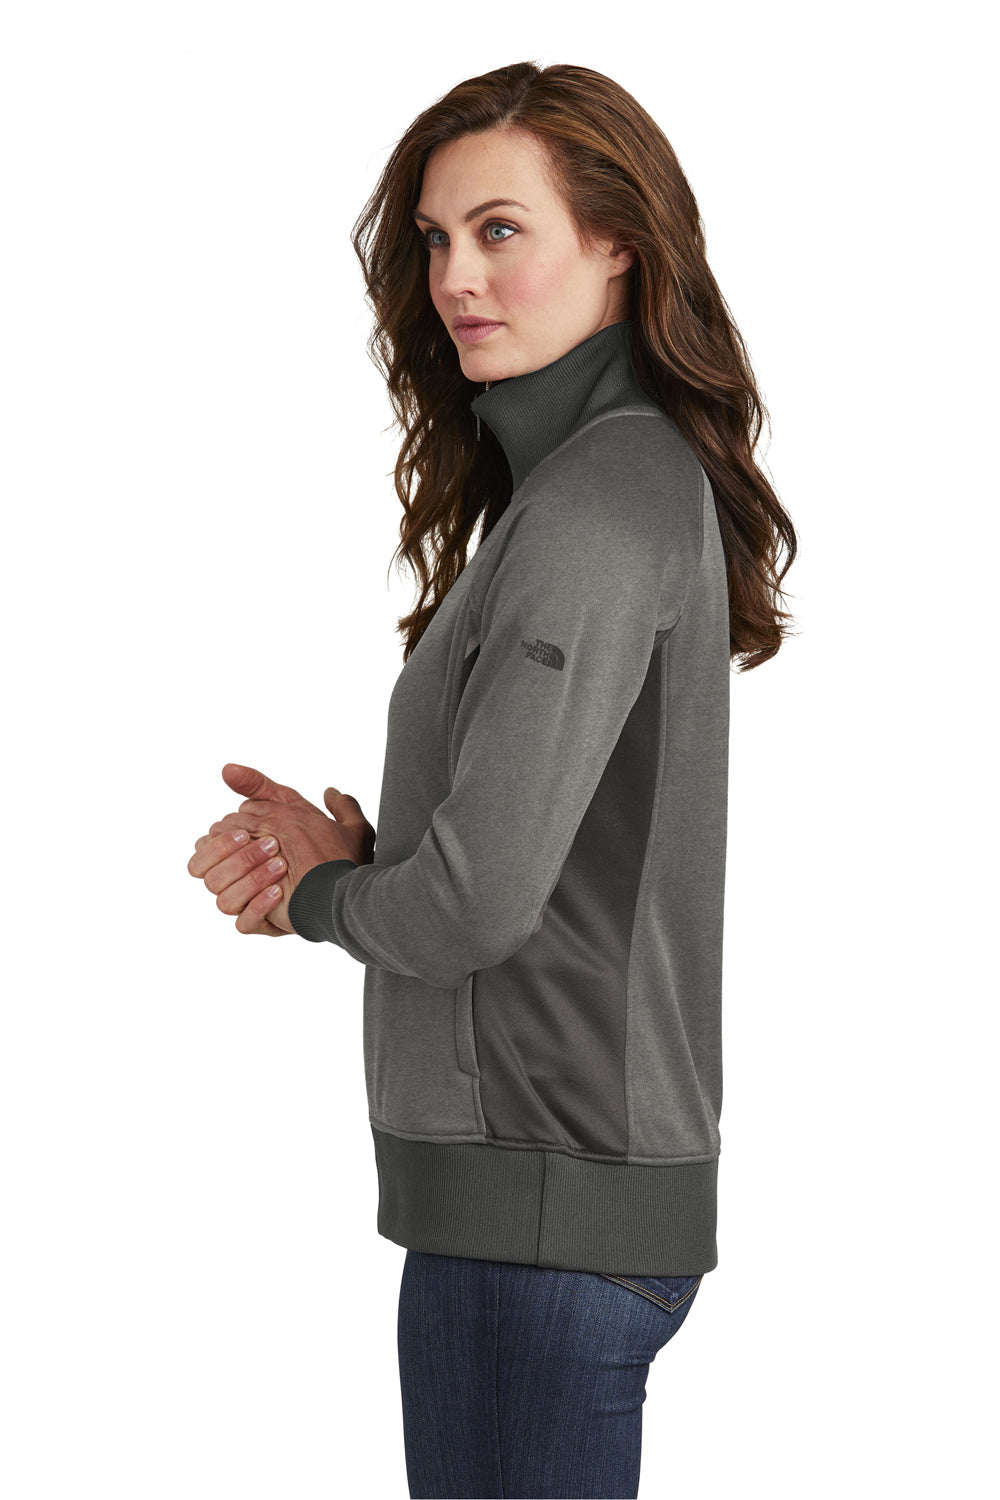 The North Face NF0A3SEV Womens Tech Full Zip Fleece Jacket Heather Grey Side